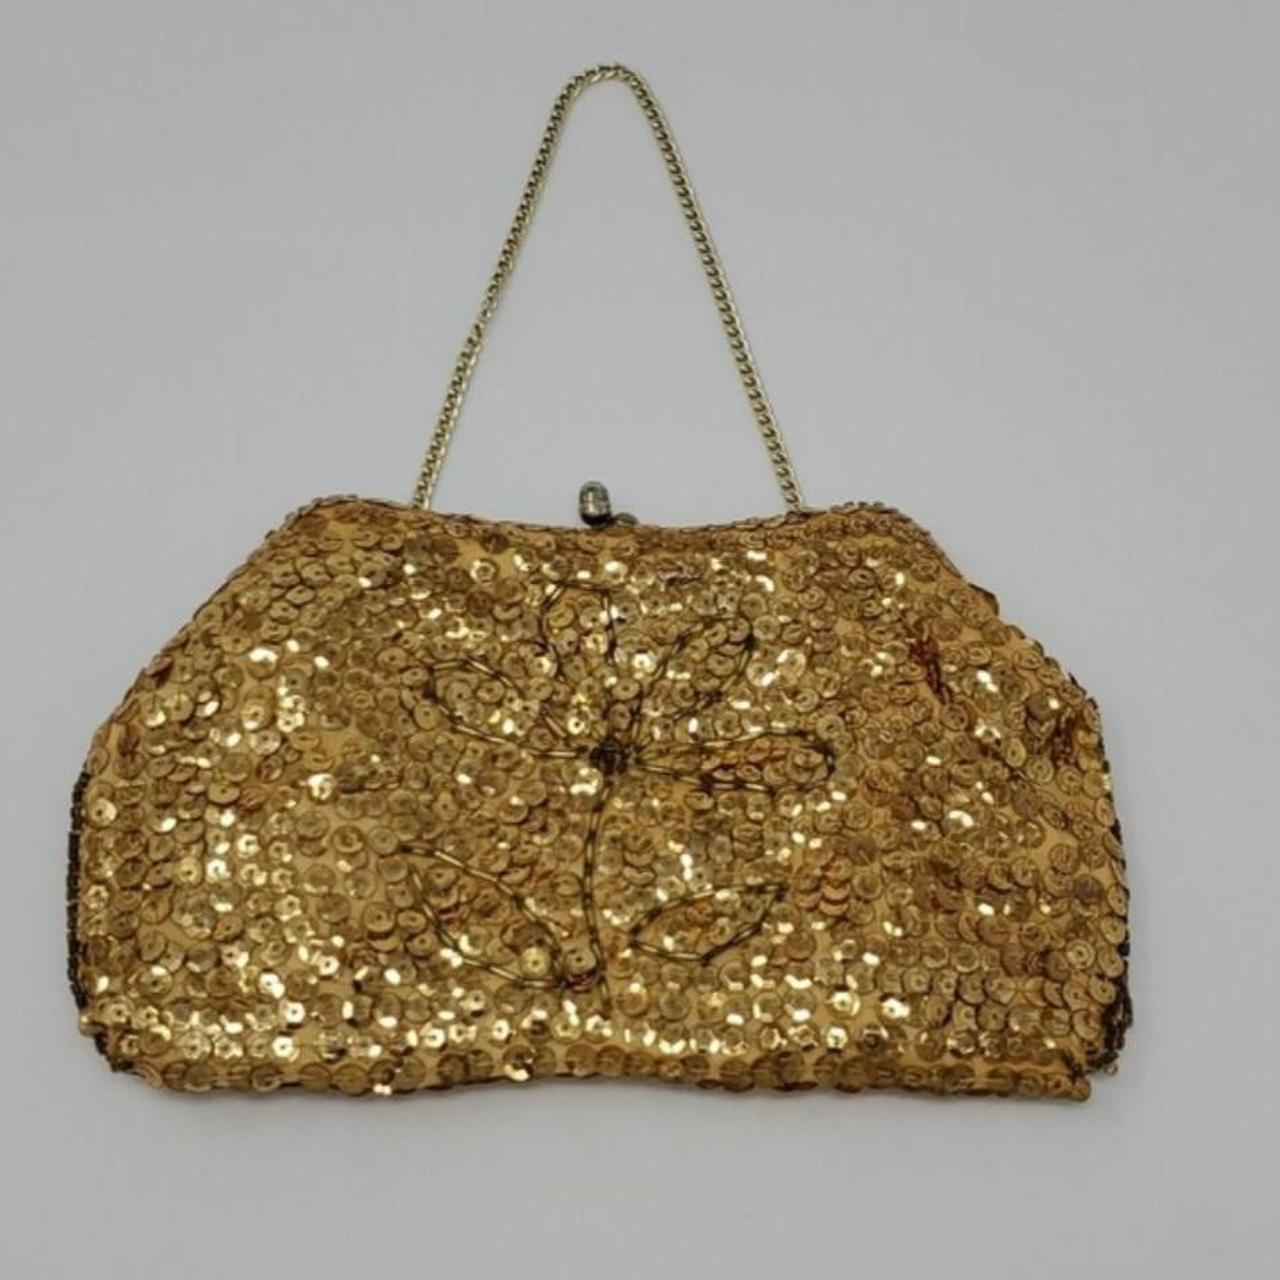 La Regale Women's Clutch Bags - Brown